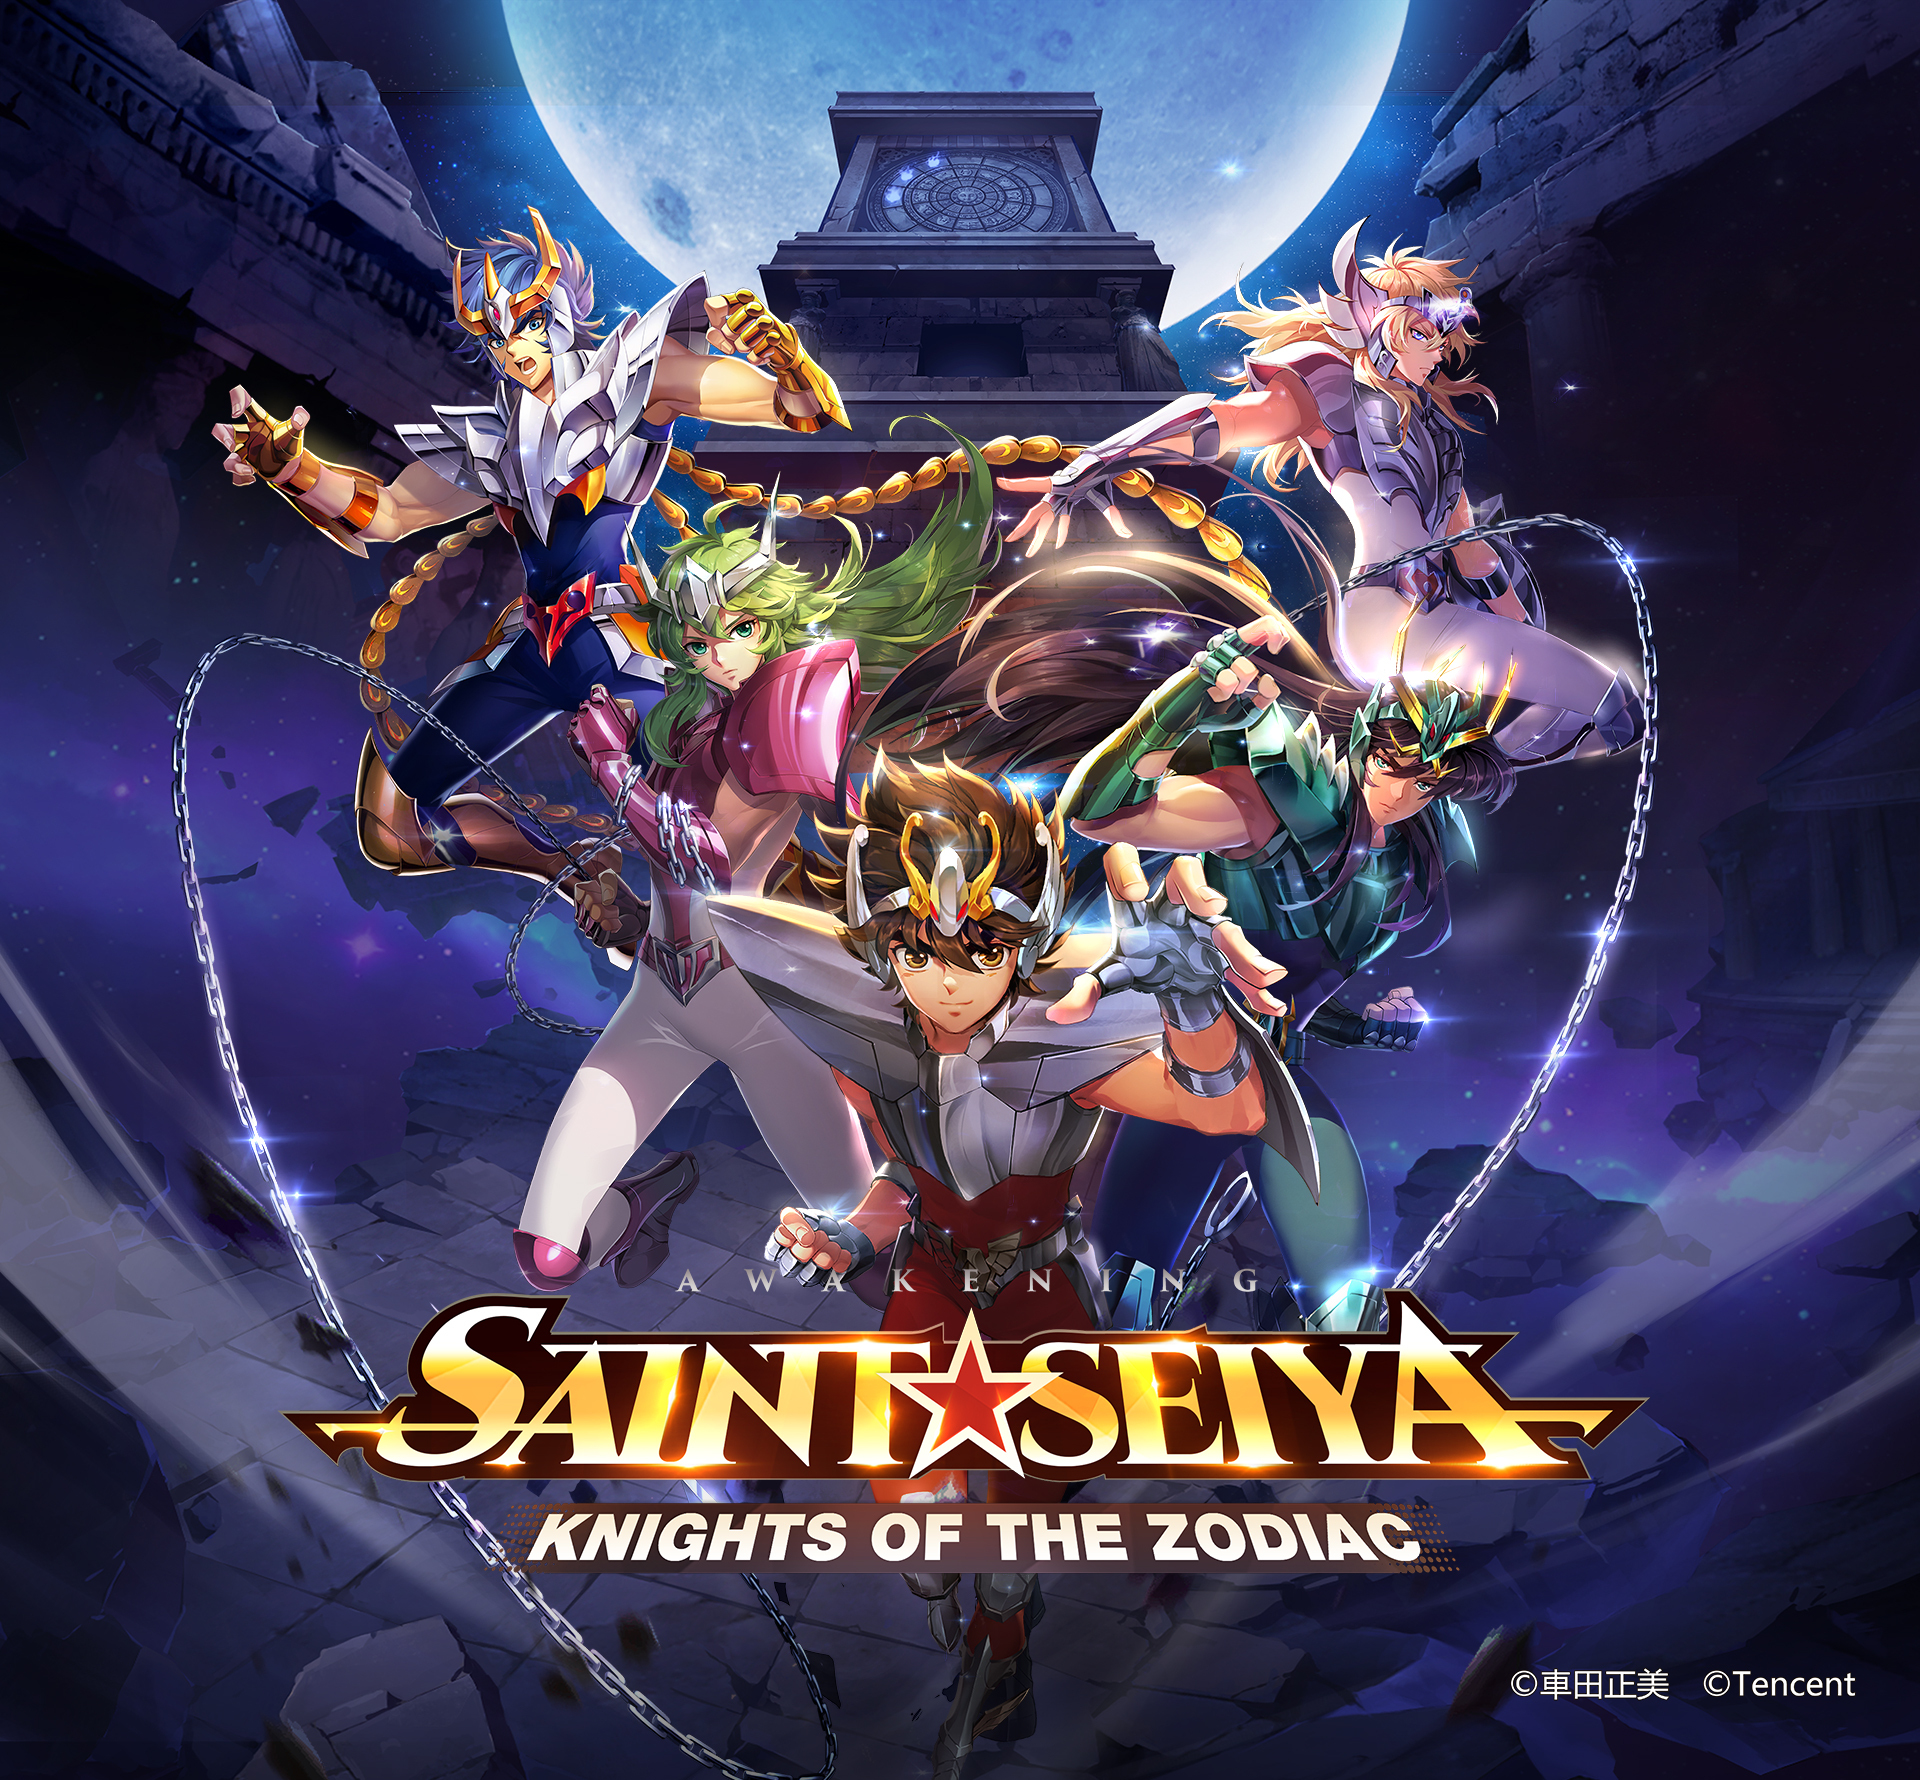 SAINT SEIYA: Knights of the Zodiac (Doblaje Latino) Reflejos - Ver en  Crunchyroll en español